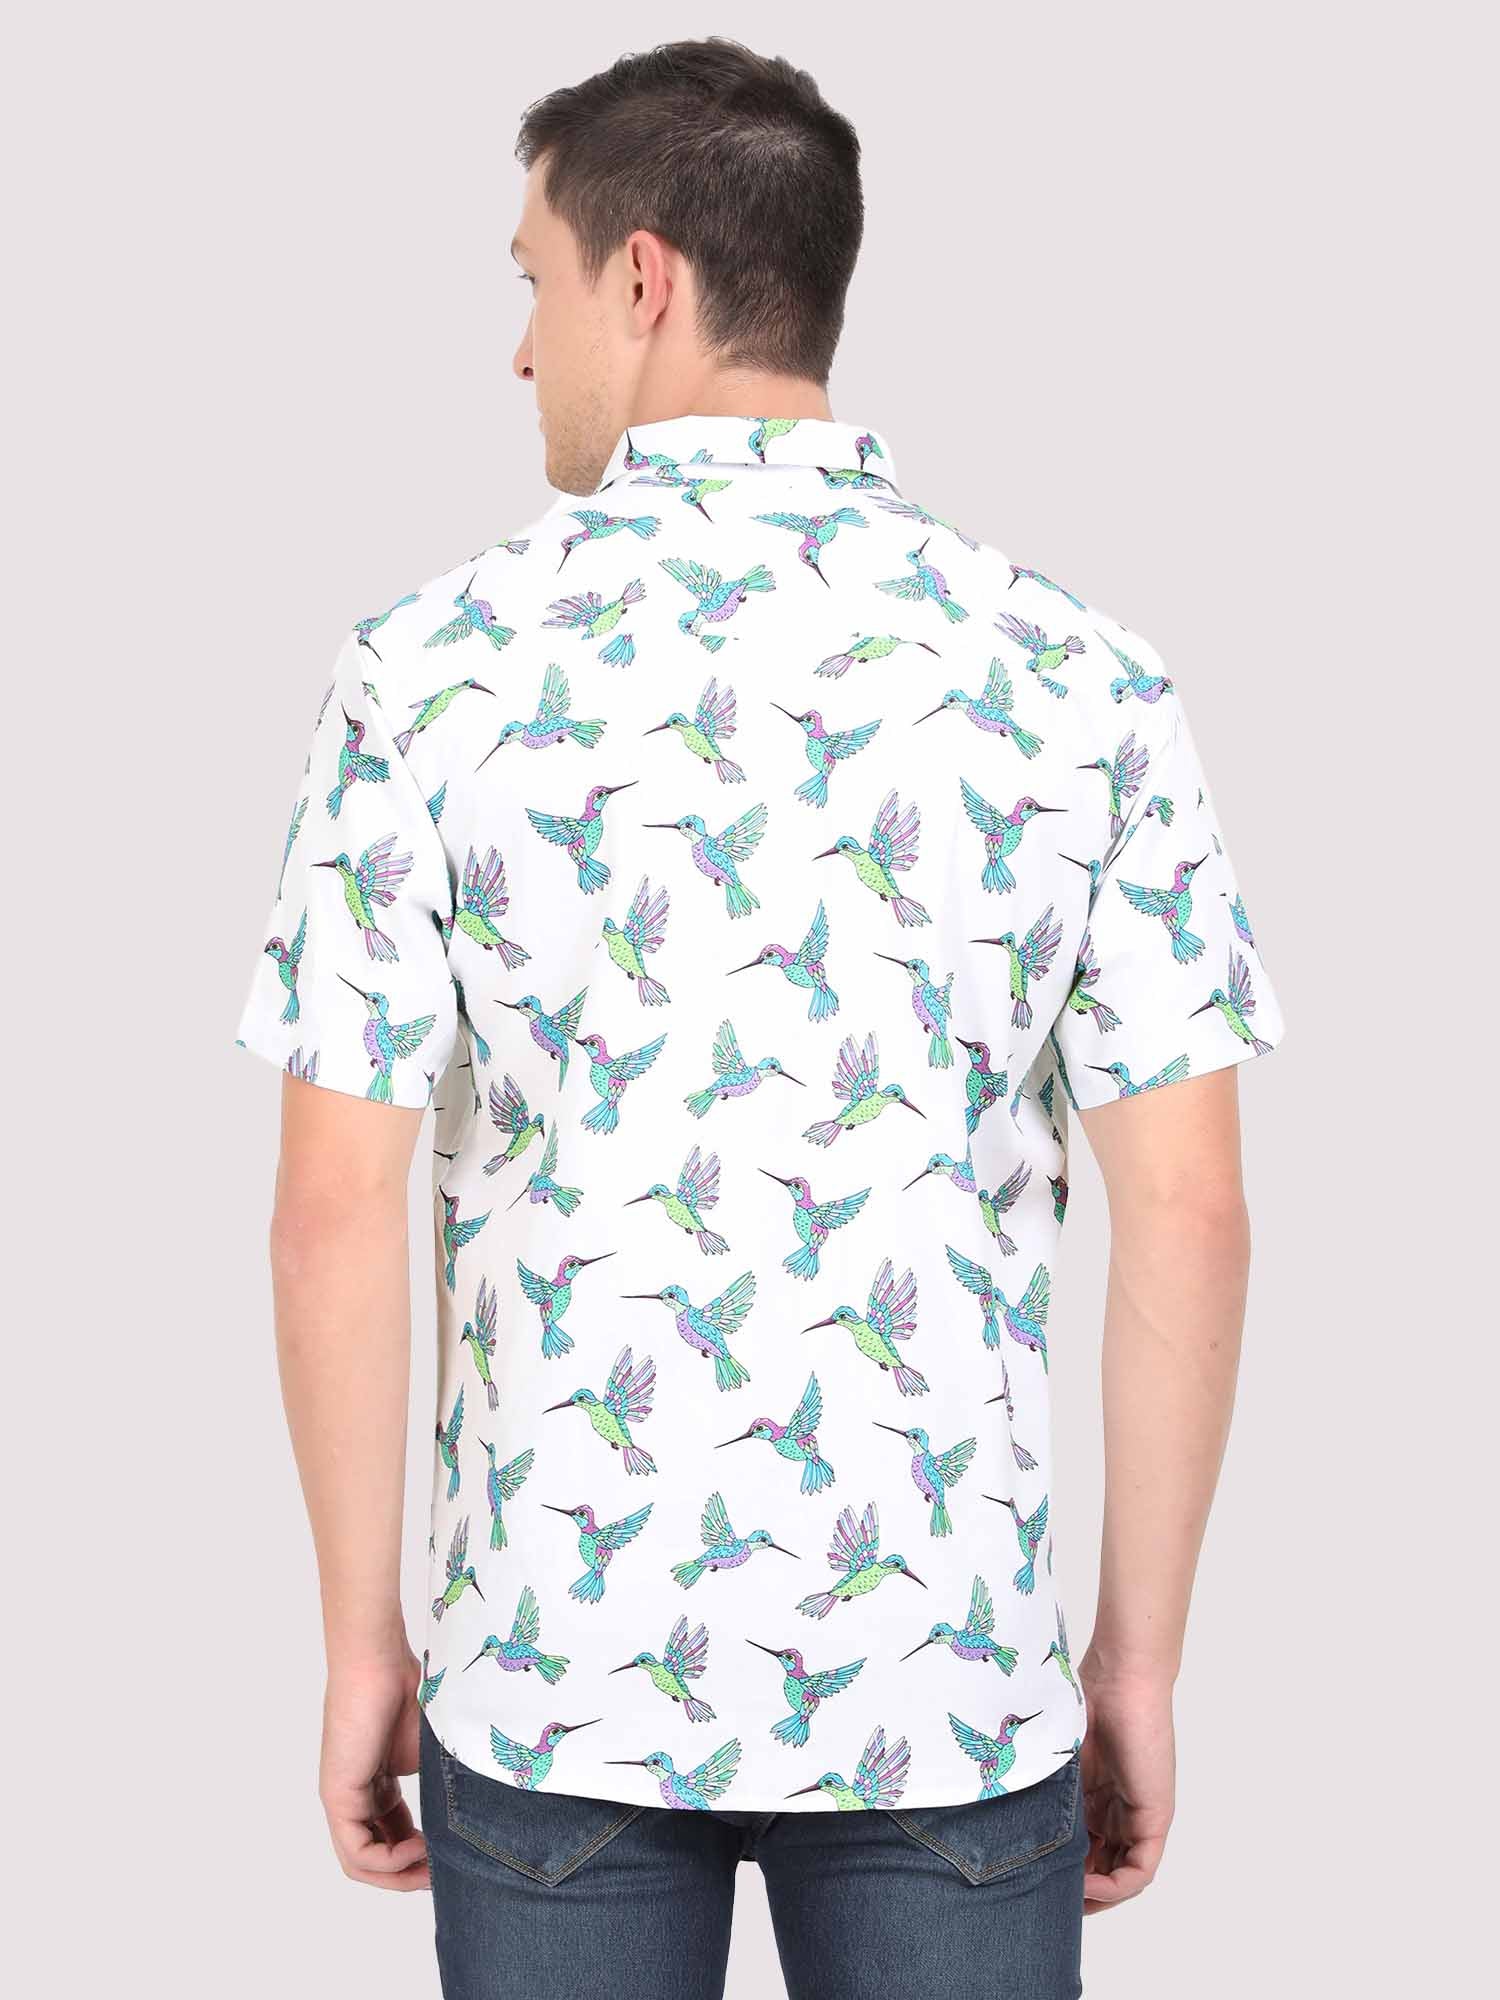 Flying Bird Digital Printed Half Shirt